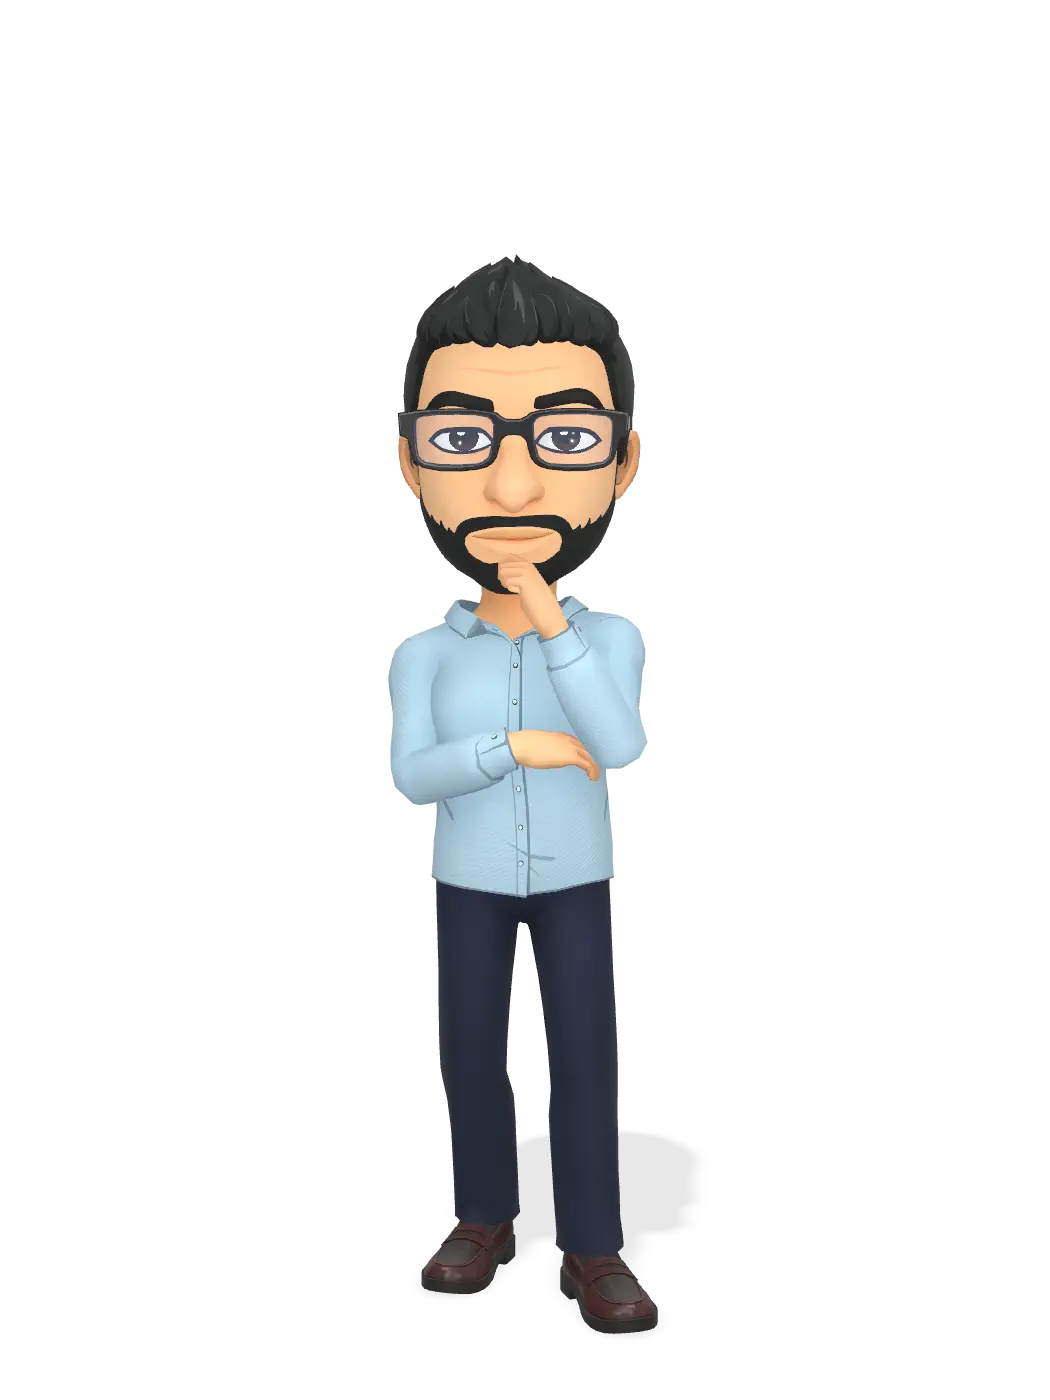 3D Bitmoji for alan_rg755 avatar